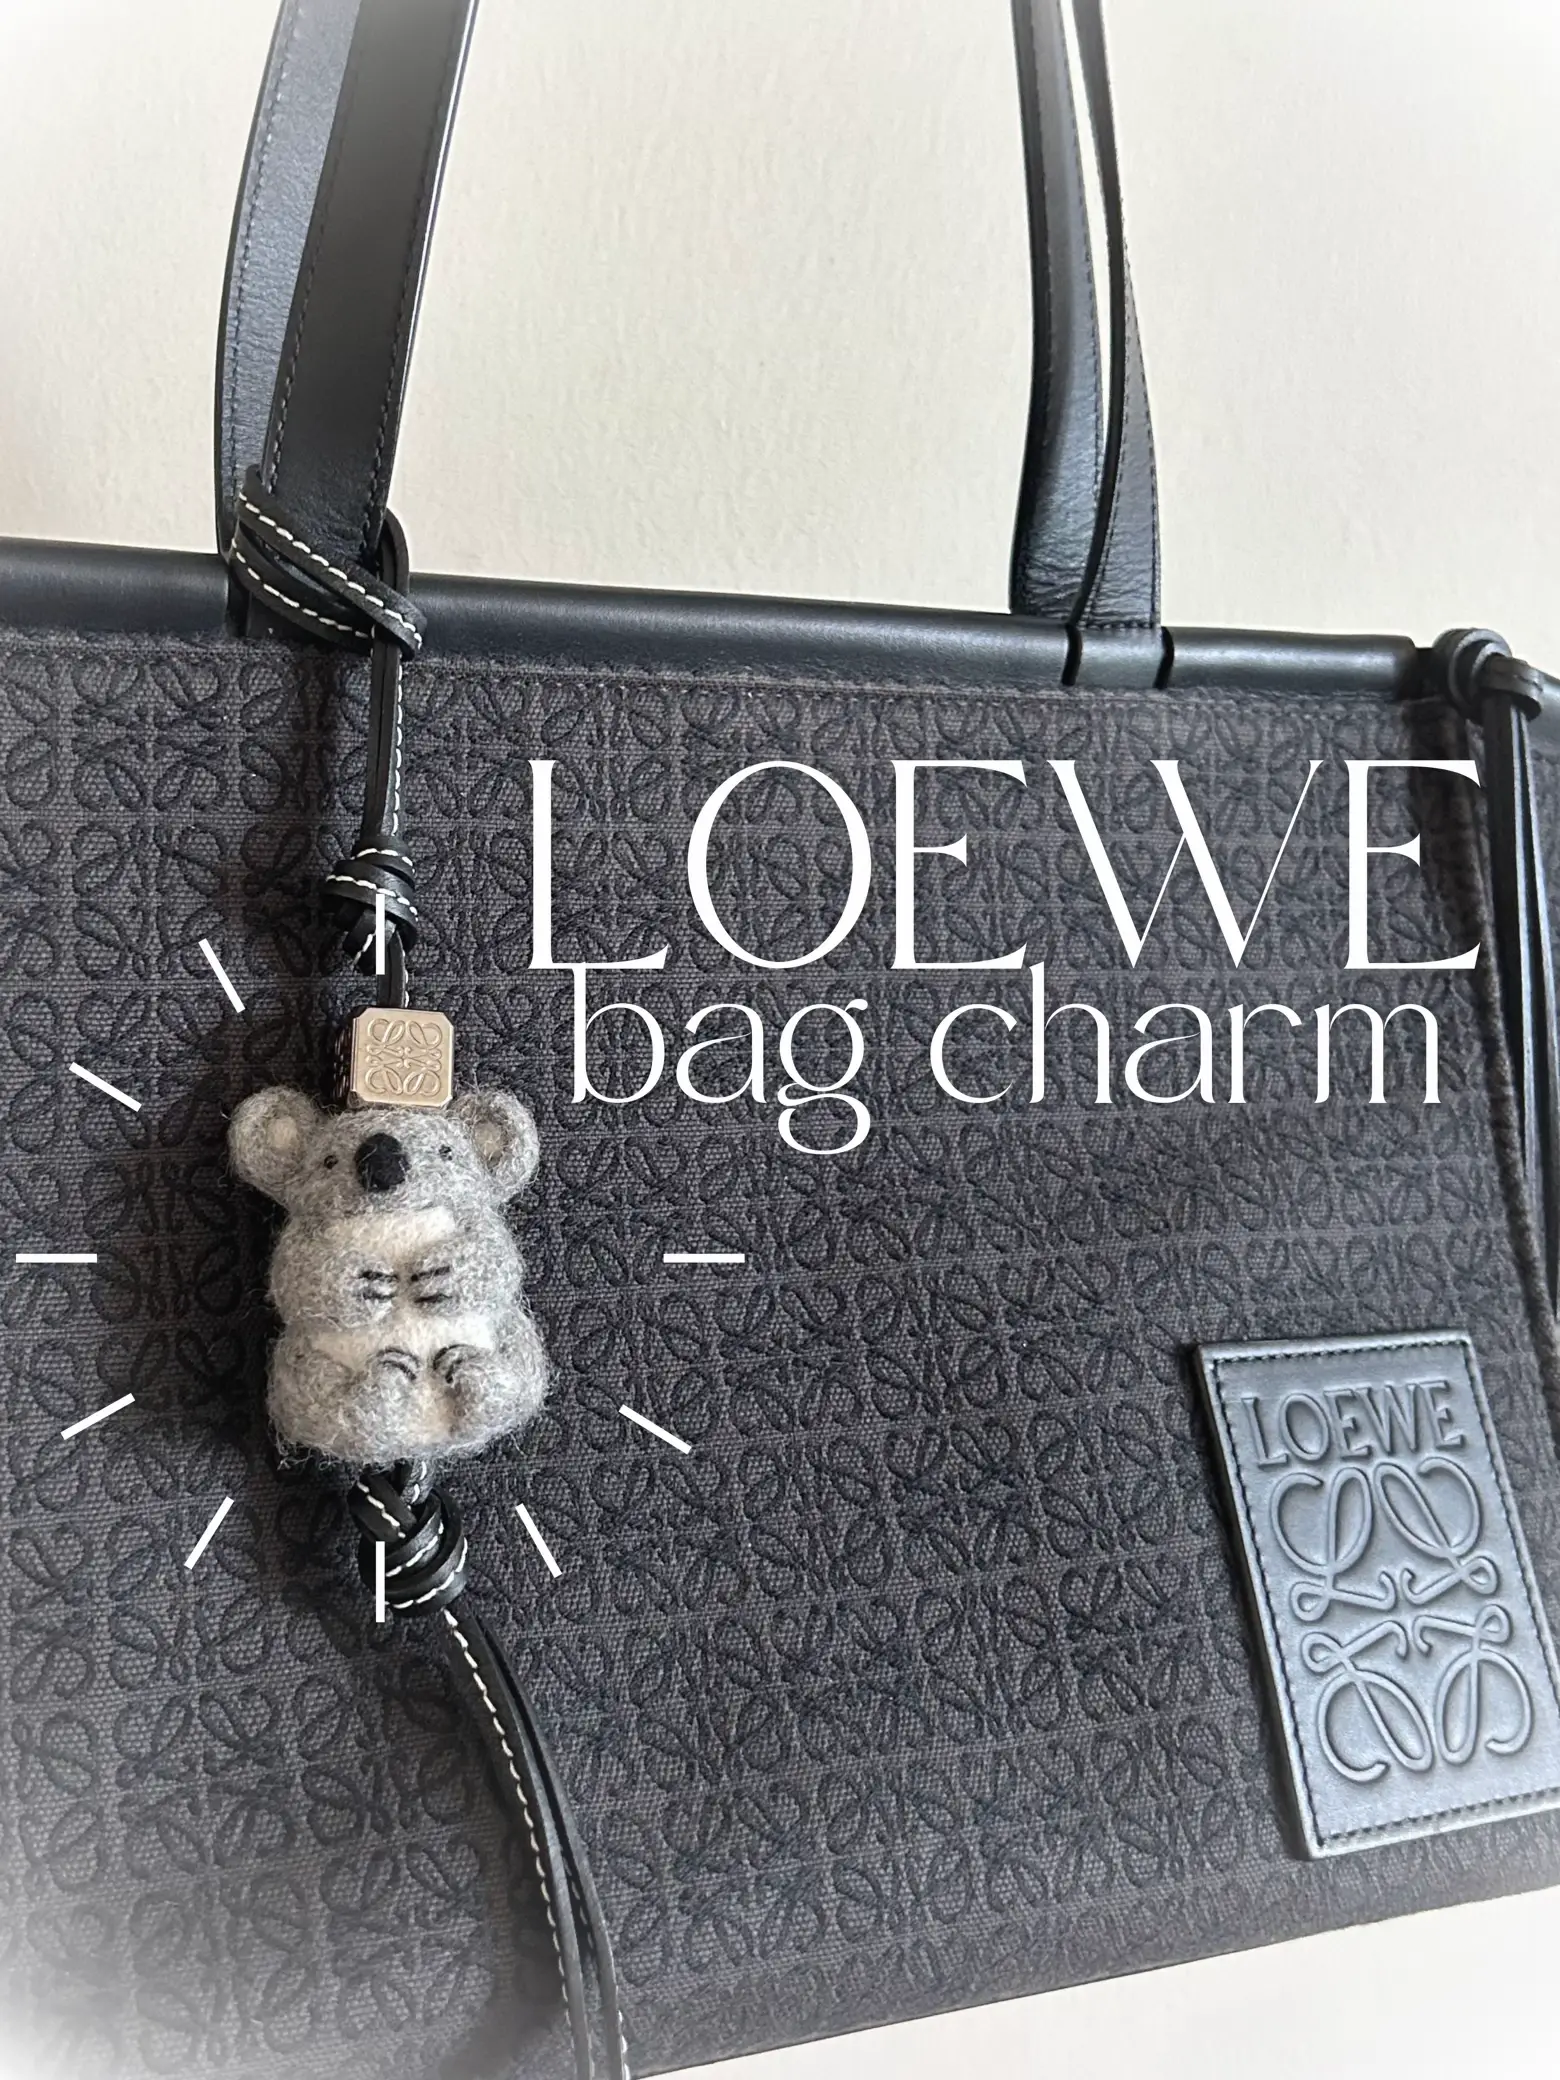 cutest loewe bag charm!!! worth the $? 👀's images(0)